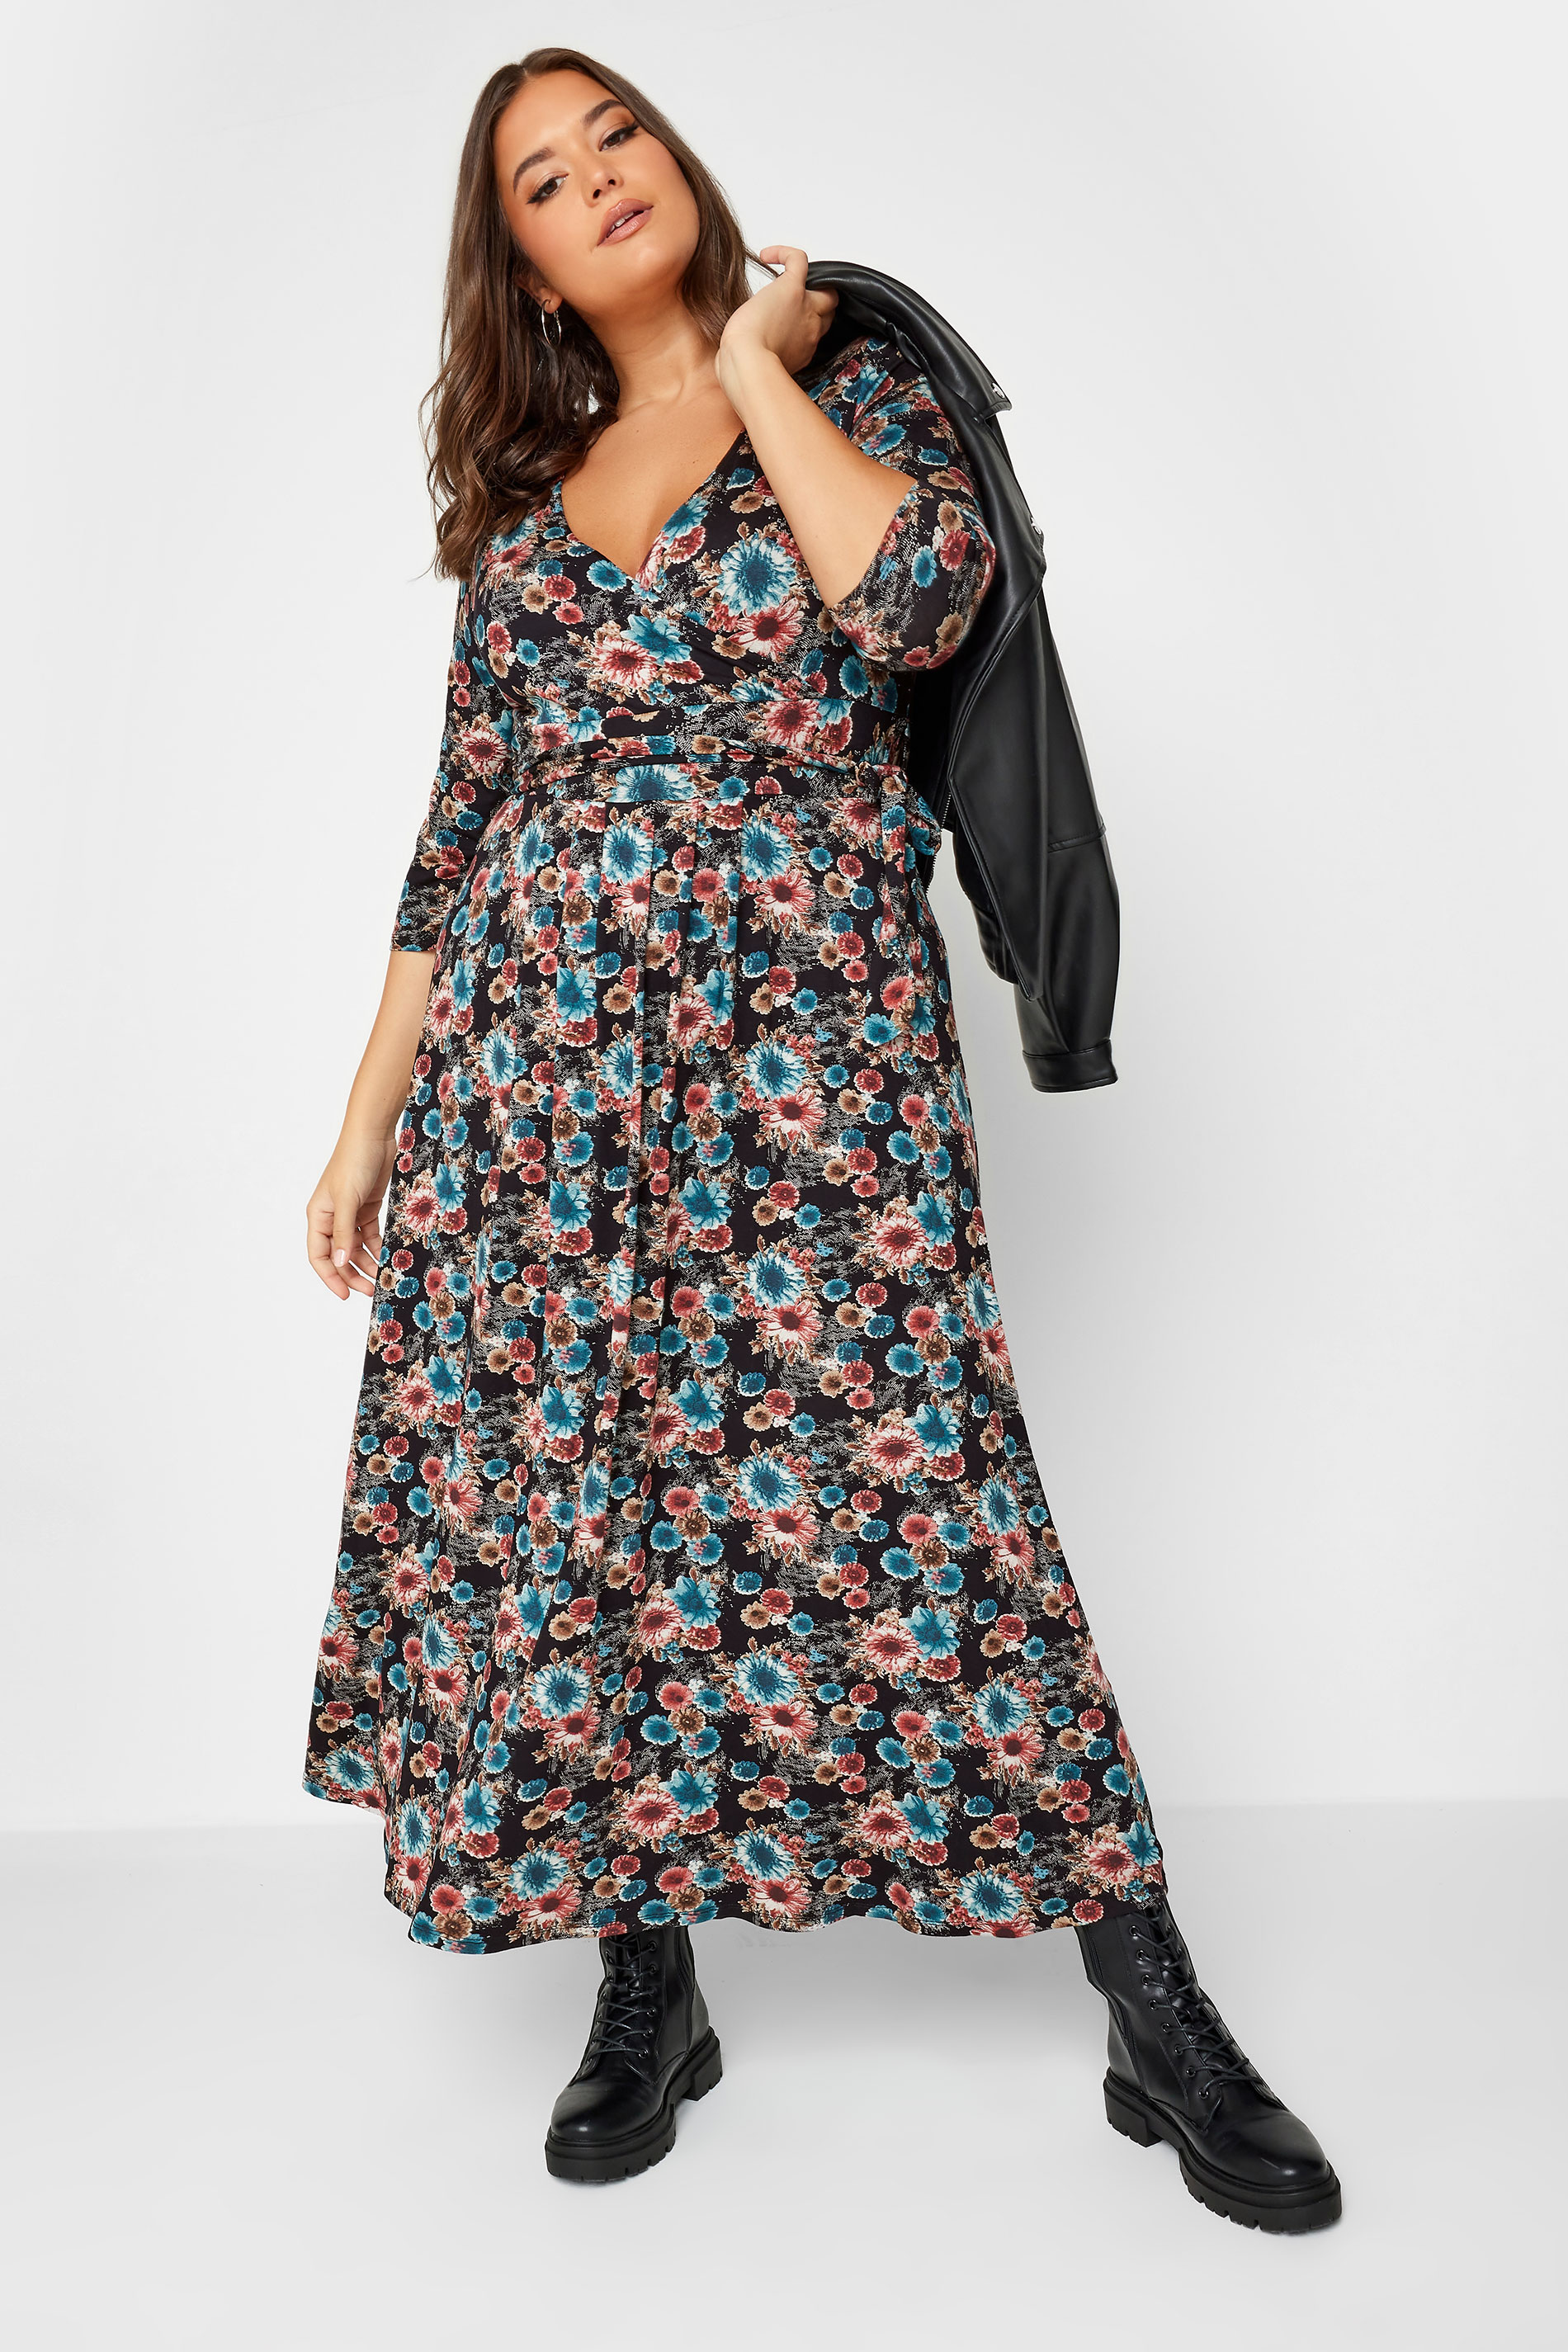 Plus Size Black Floral Print Wrap Maxi Dress | Yours Clothing 2